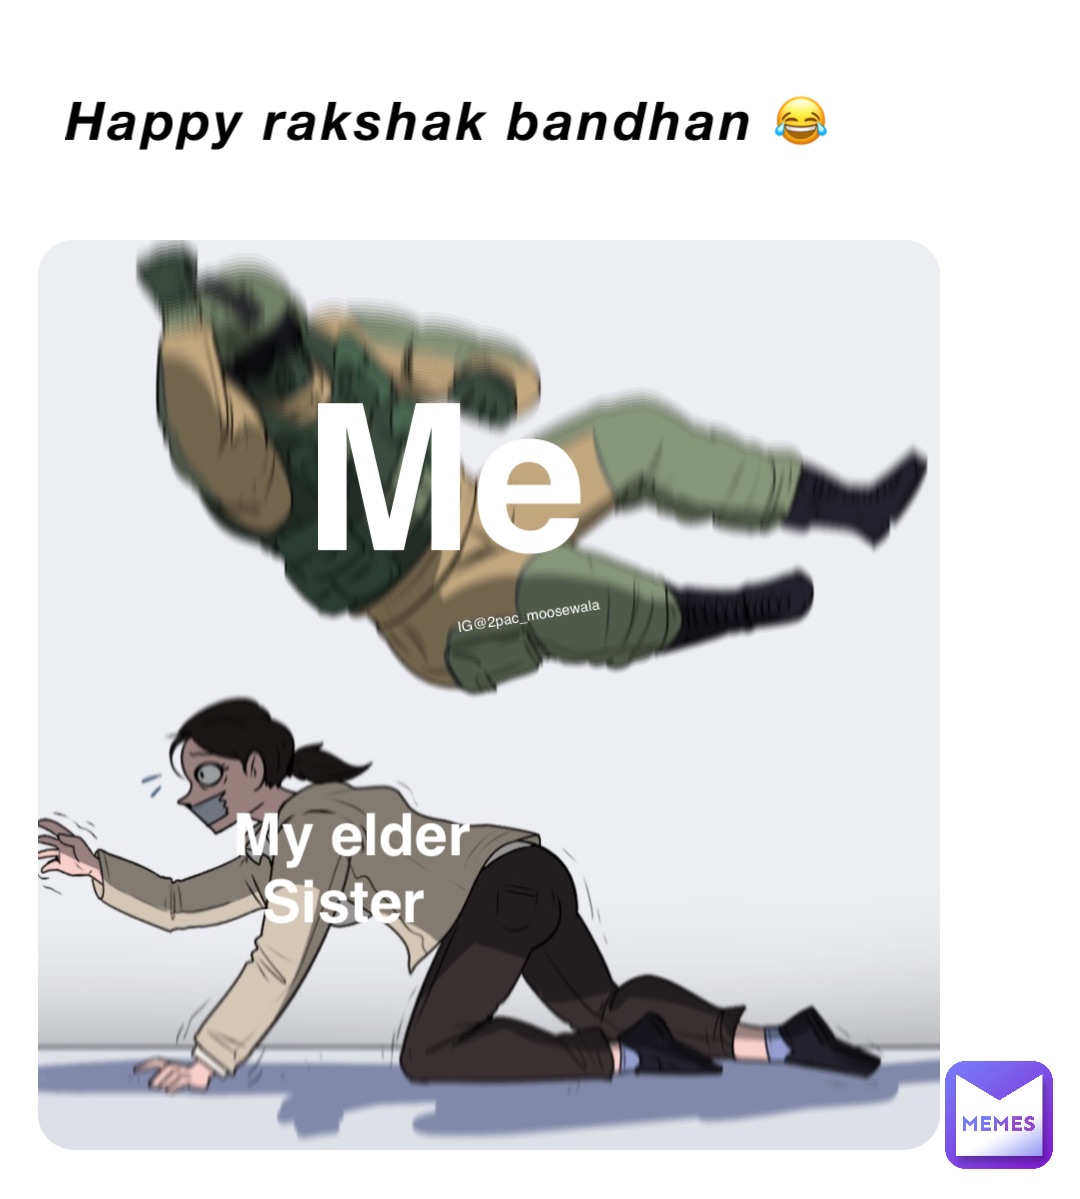 Happy rakshak bandhan 😂 Me My elder 
Sister IG@2pac_moosewala